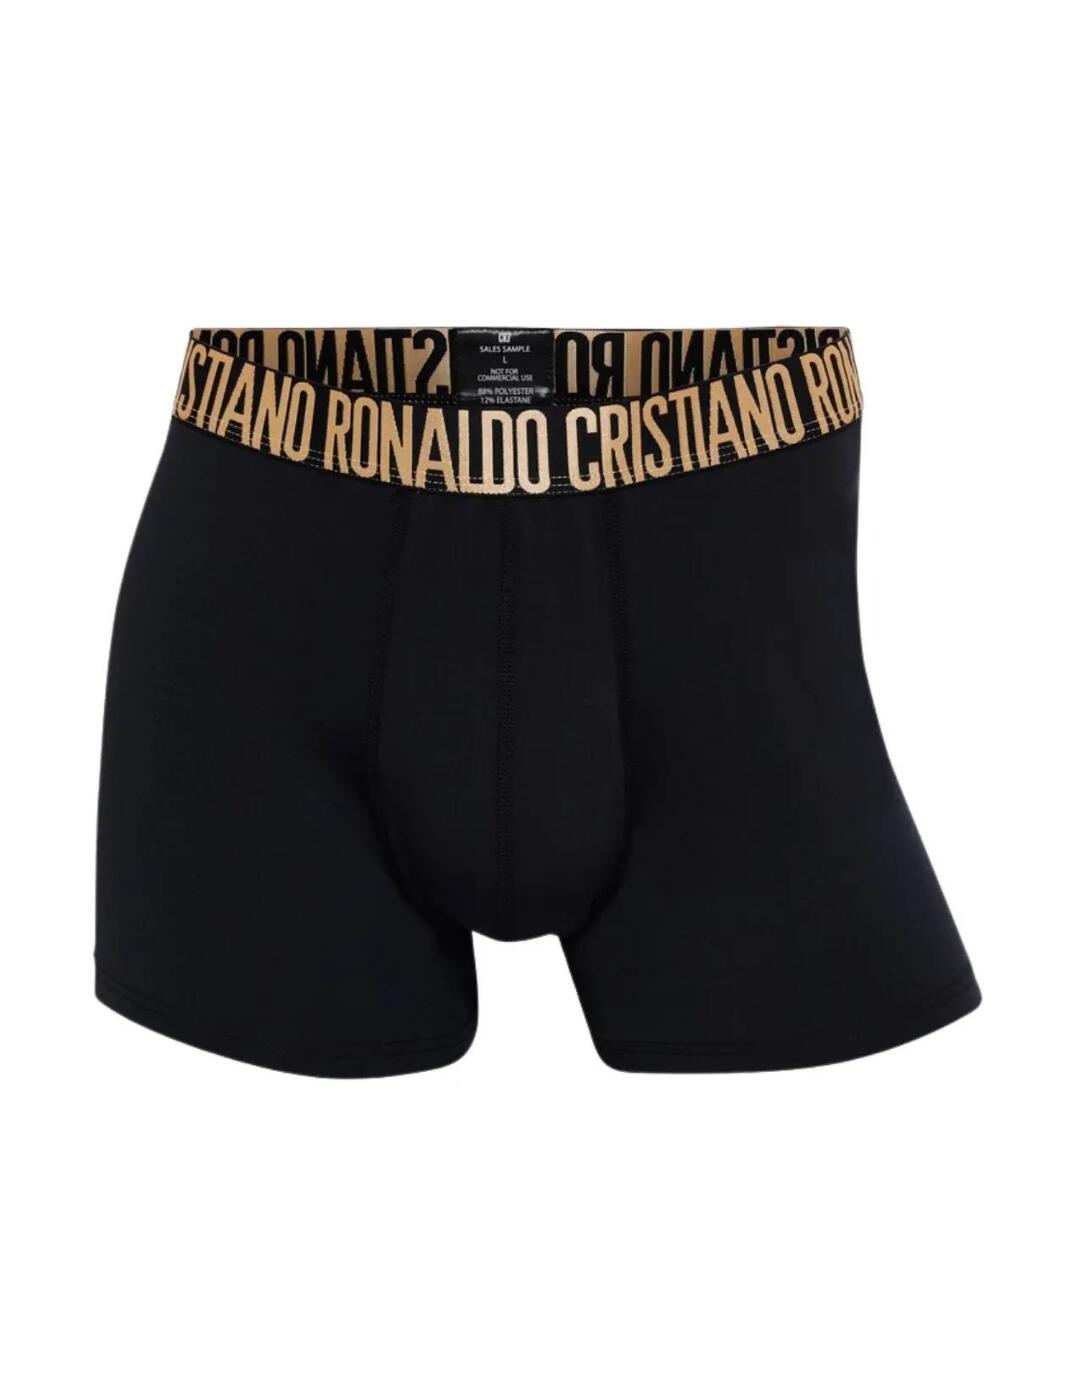 CR7 Men's 5-Pack Cotton Blend Trunks – CR7 Underwear